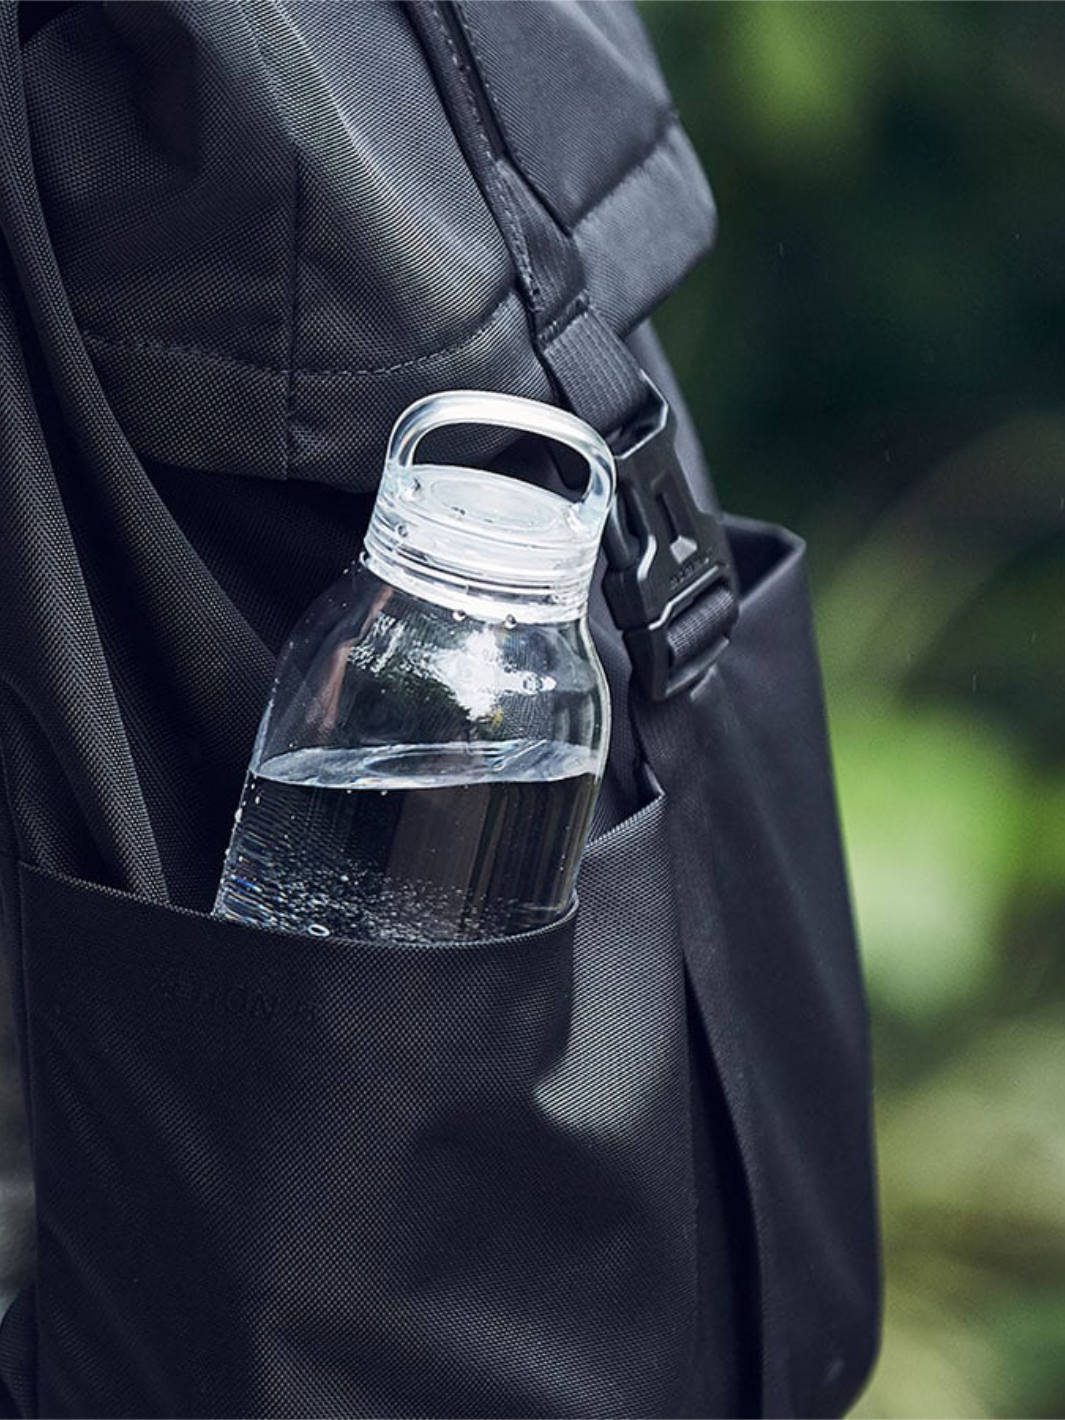 Kinto Water Bottle - Olive